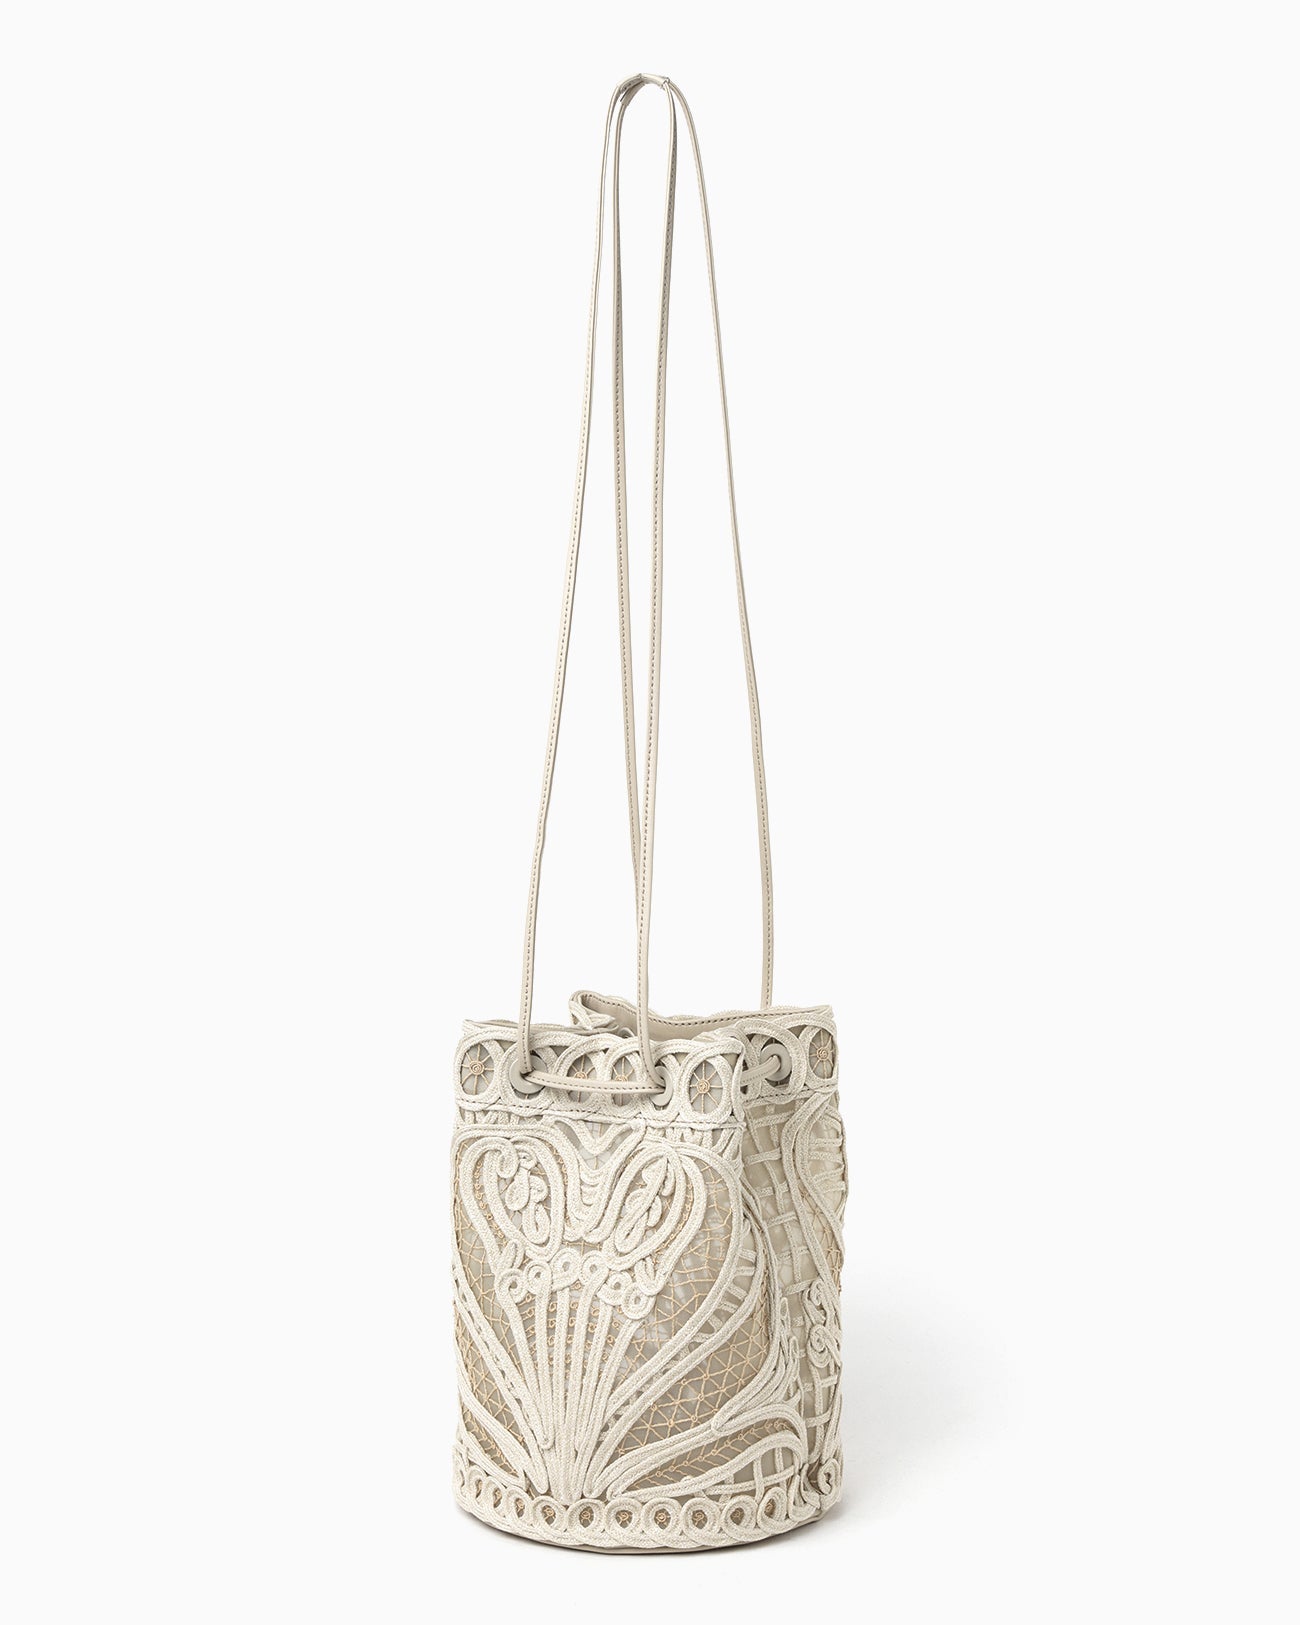 Cording Embroidery Bucket Bag - beige